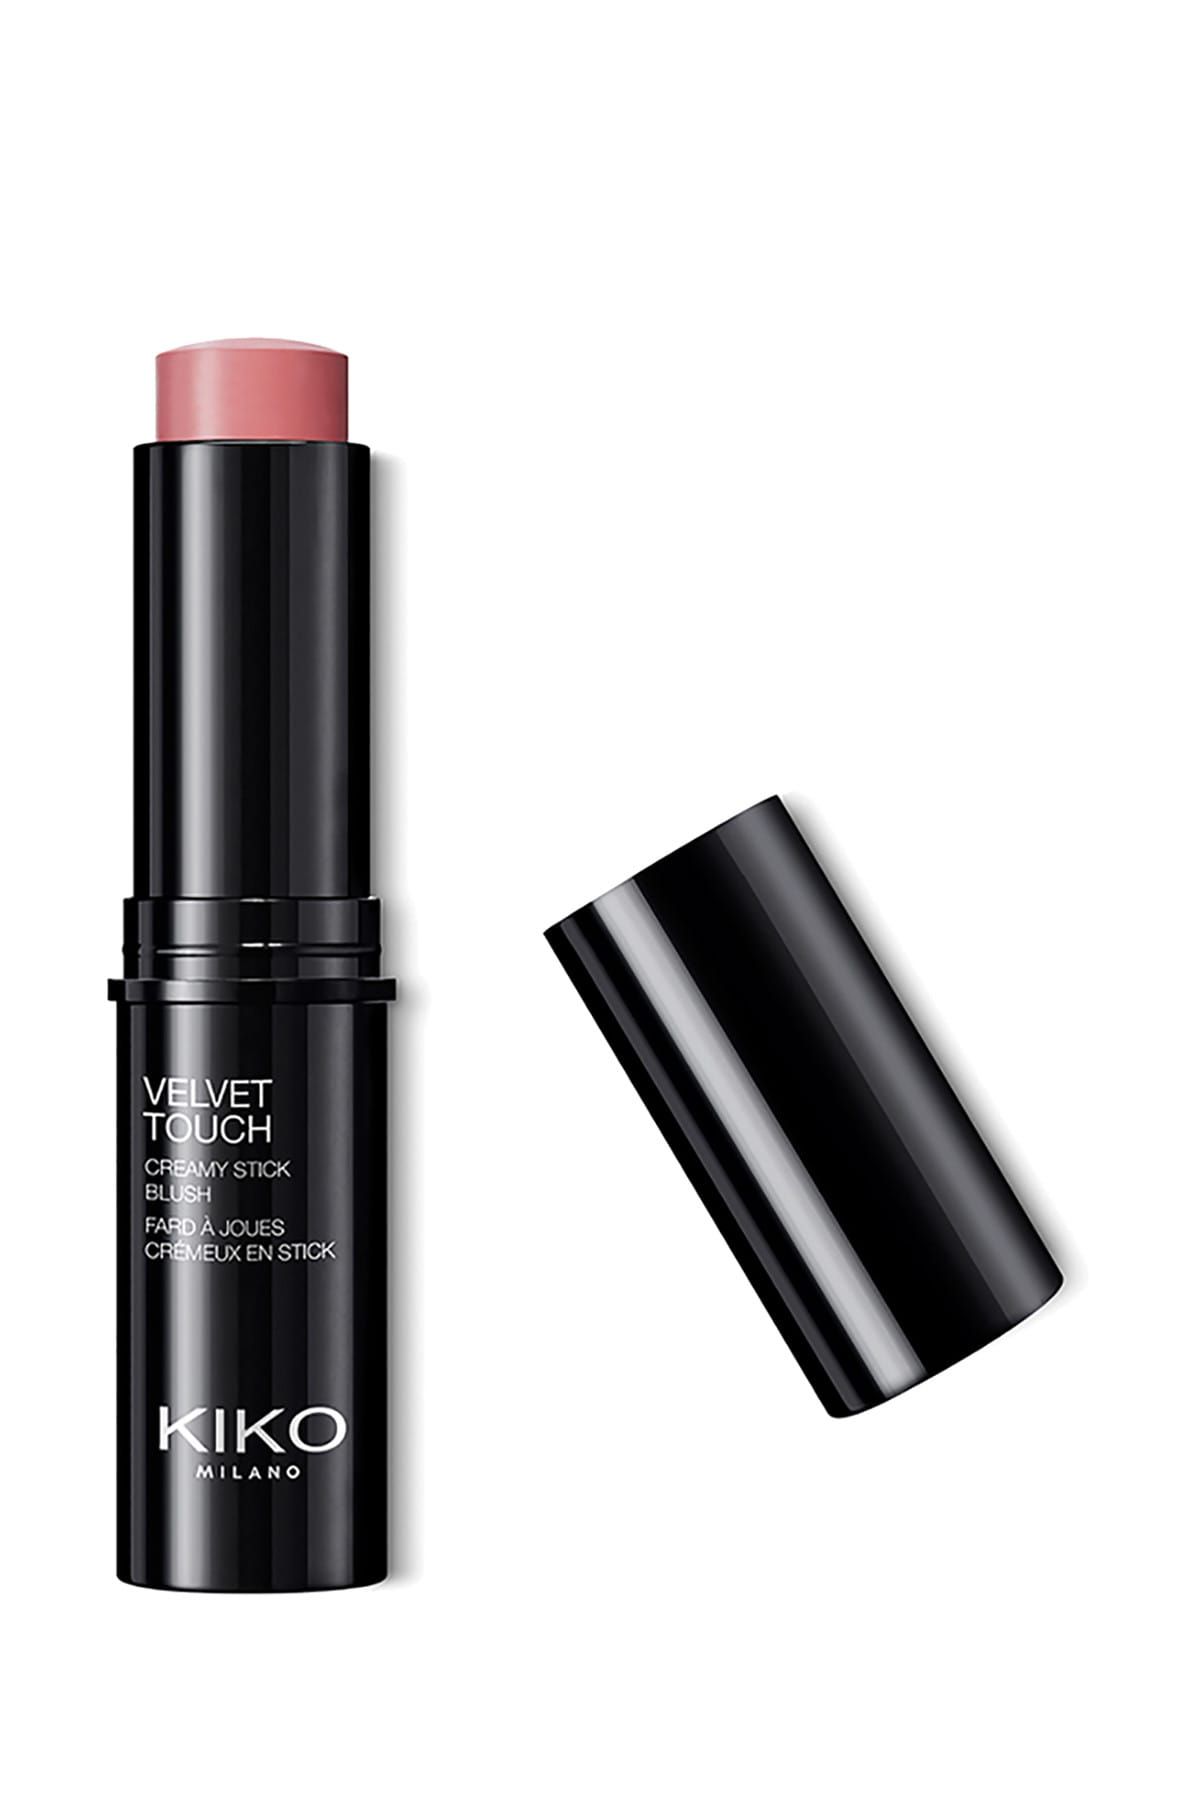 KIKO Stick Allık - Velvet Touch Creamy Stick Blush 08 Rose Mauve 10 g 8025272604970